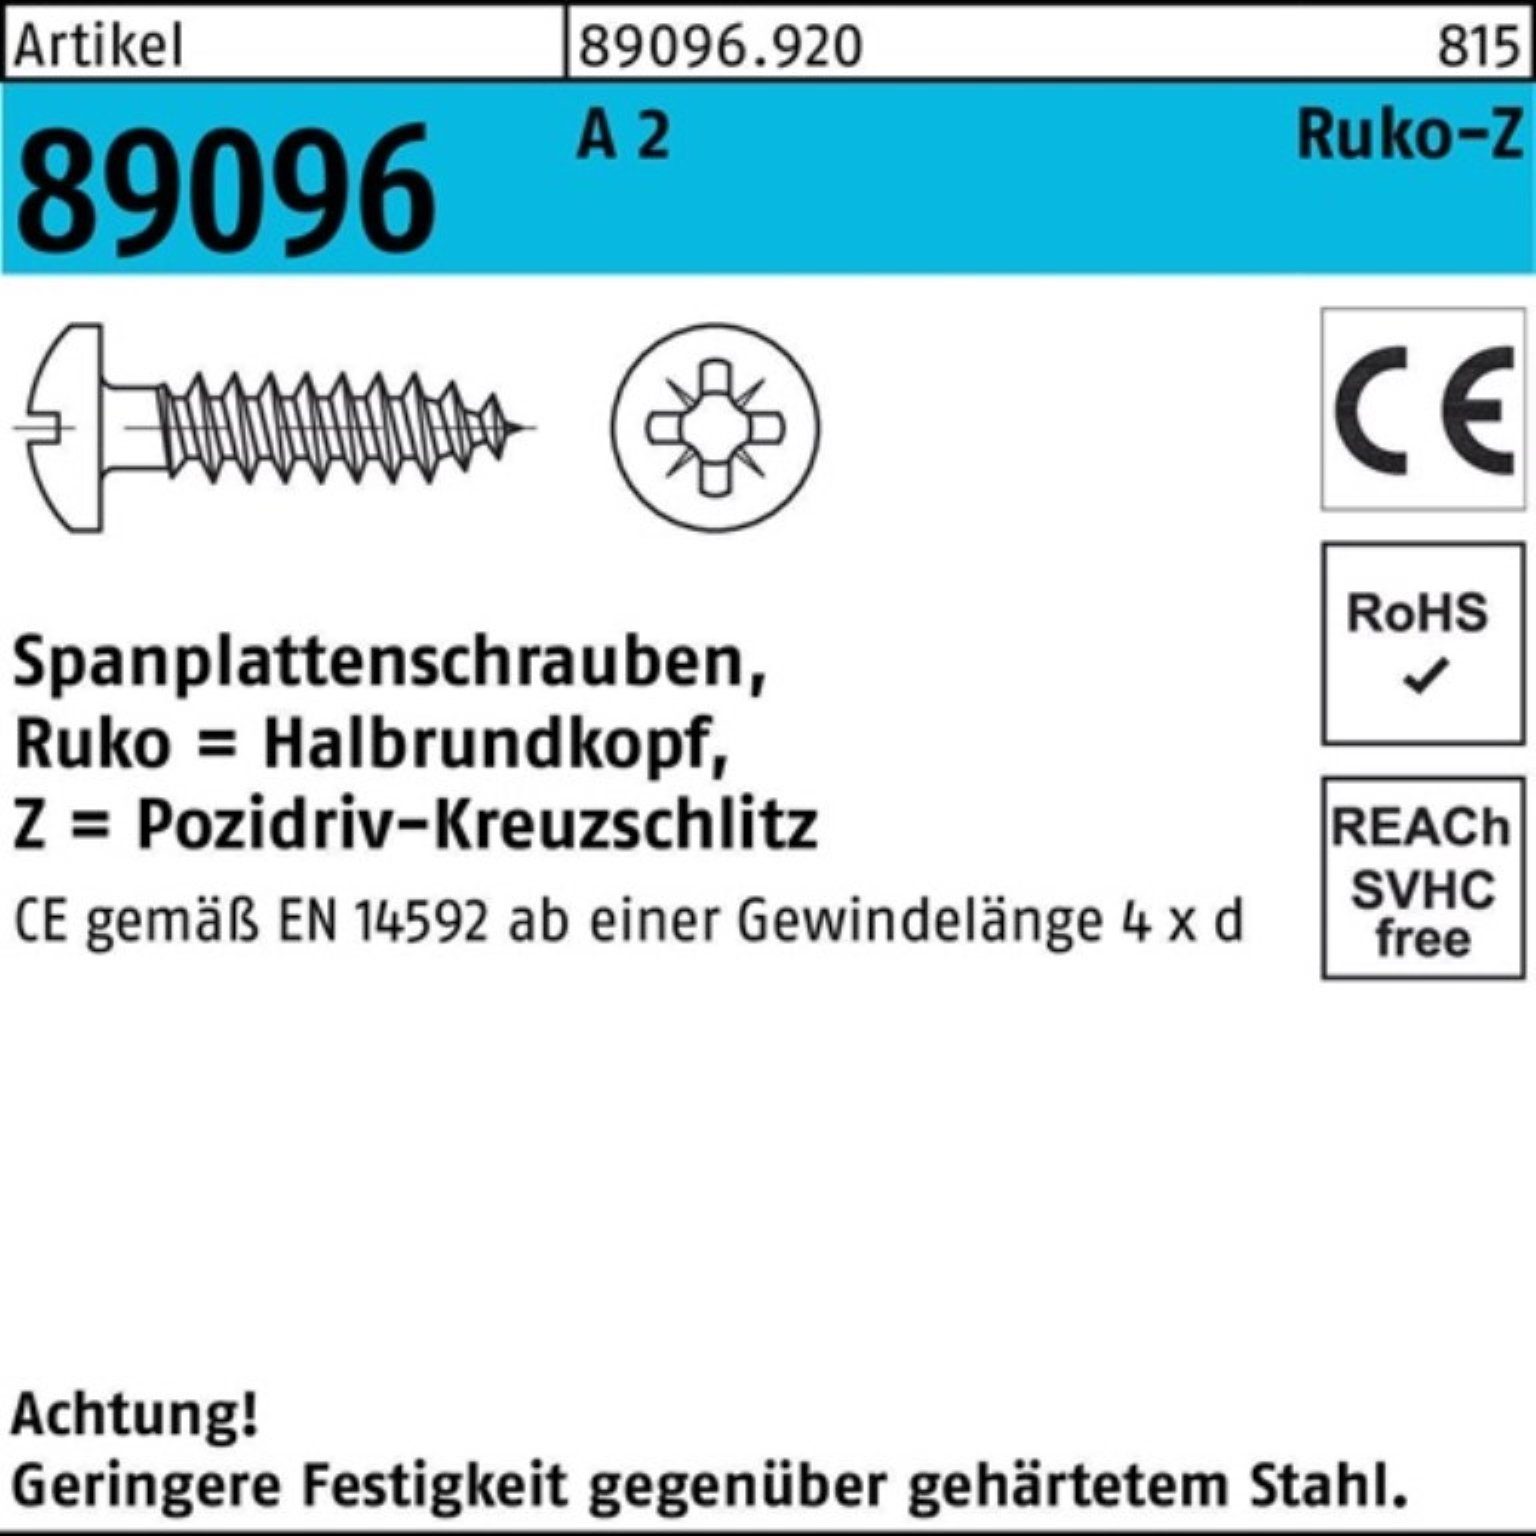 Reyher Spanplattenschraube 1000er 2 R 3x Stüc A PZ Spanplattenschraube 20-Z 89096 HAKO Pack 1000